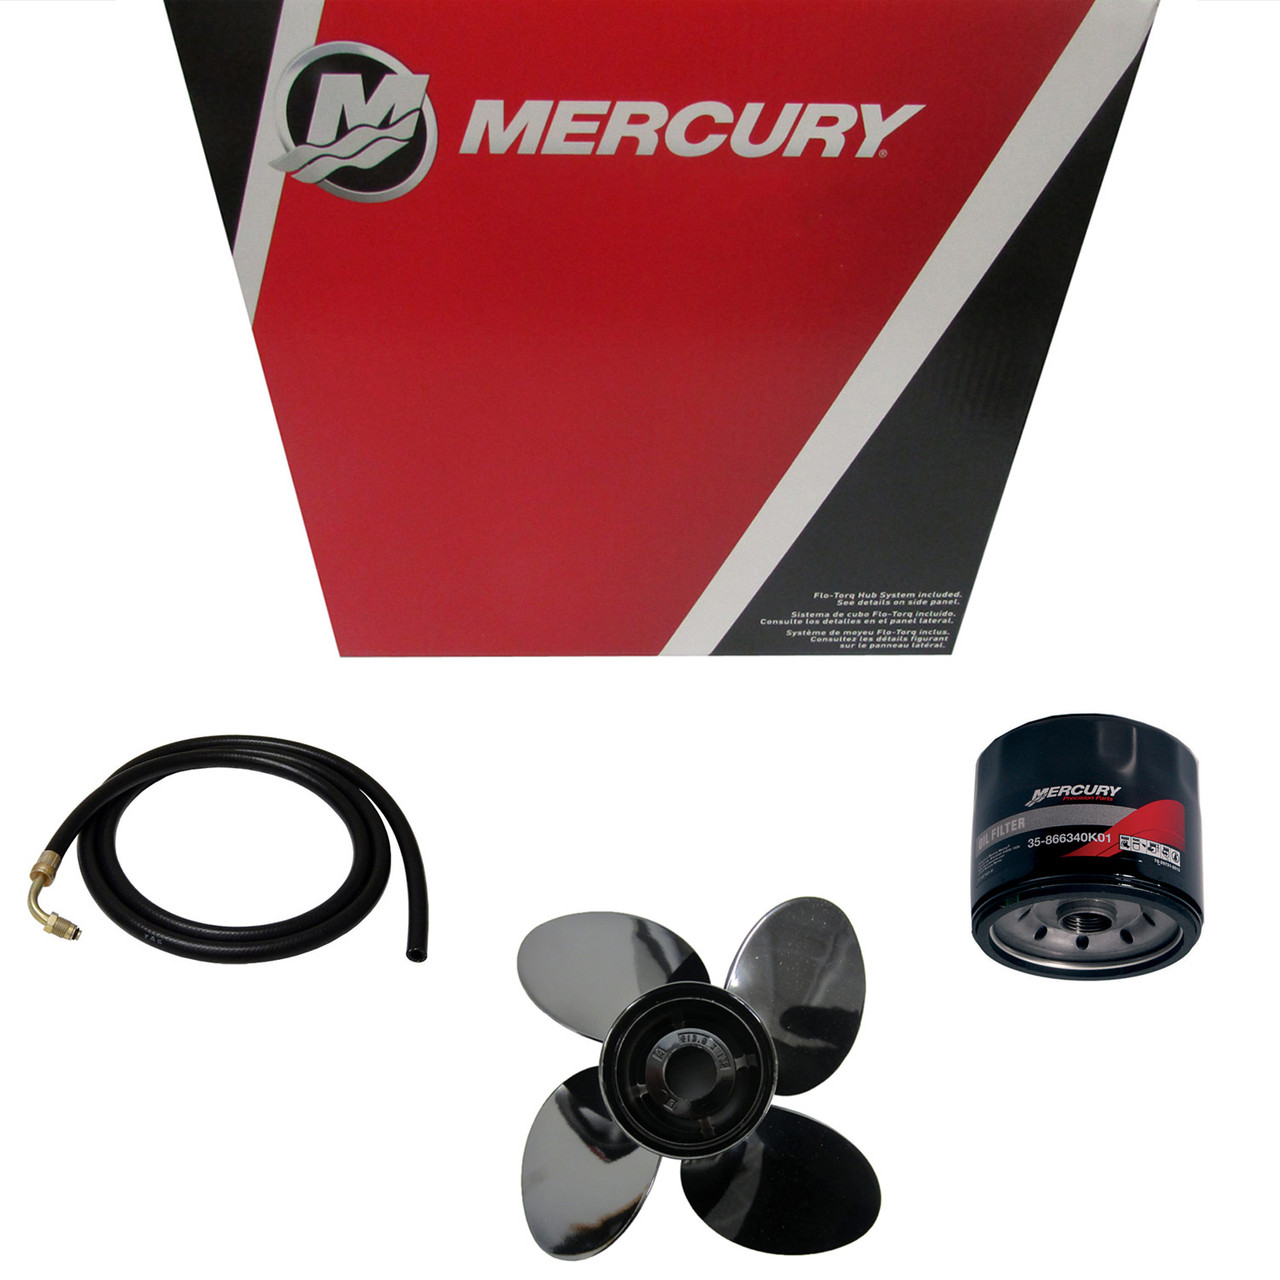 Mercury Marine / Mercruiser New OEM Cd Unit, 823034T